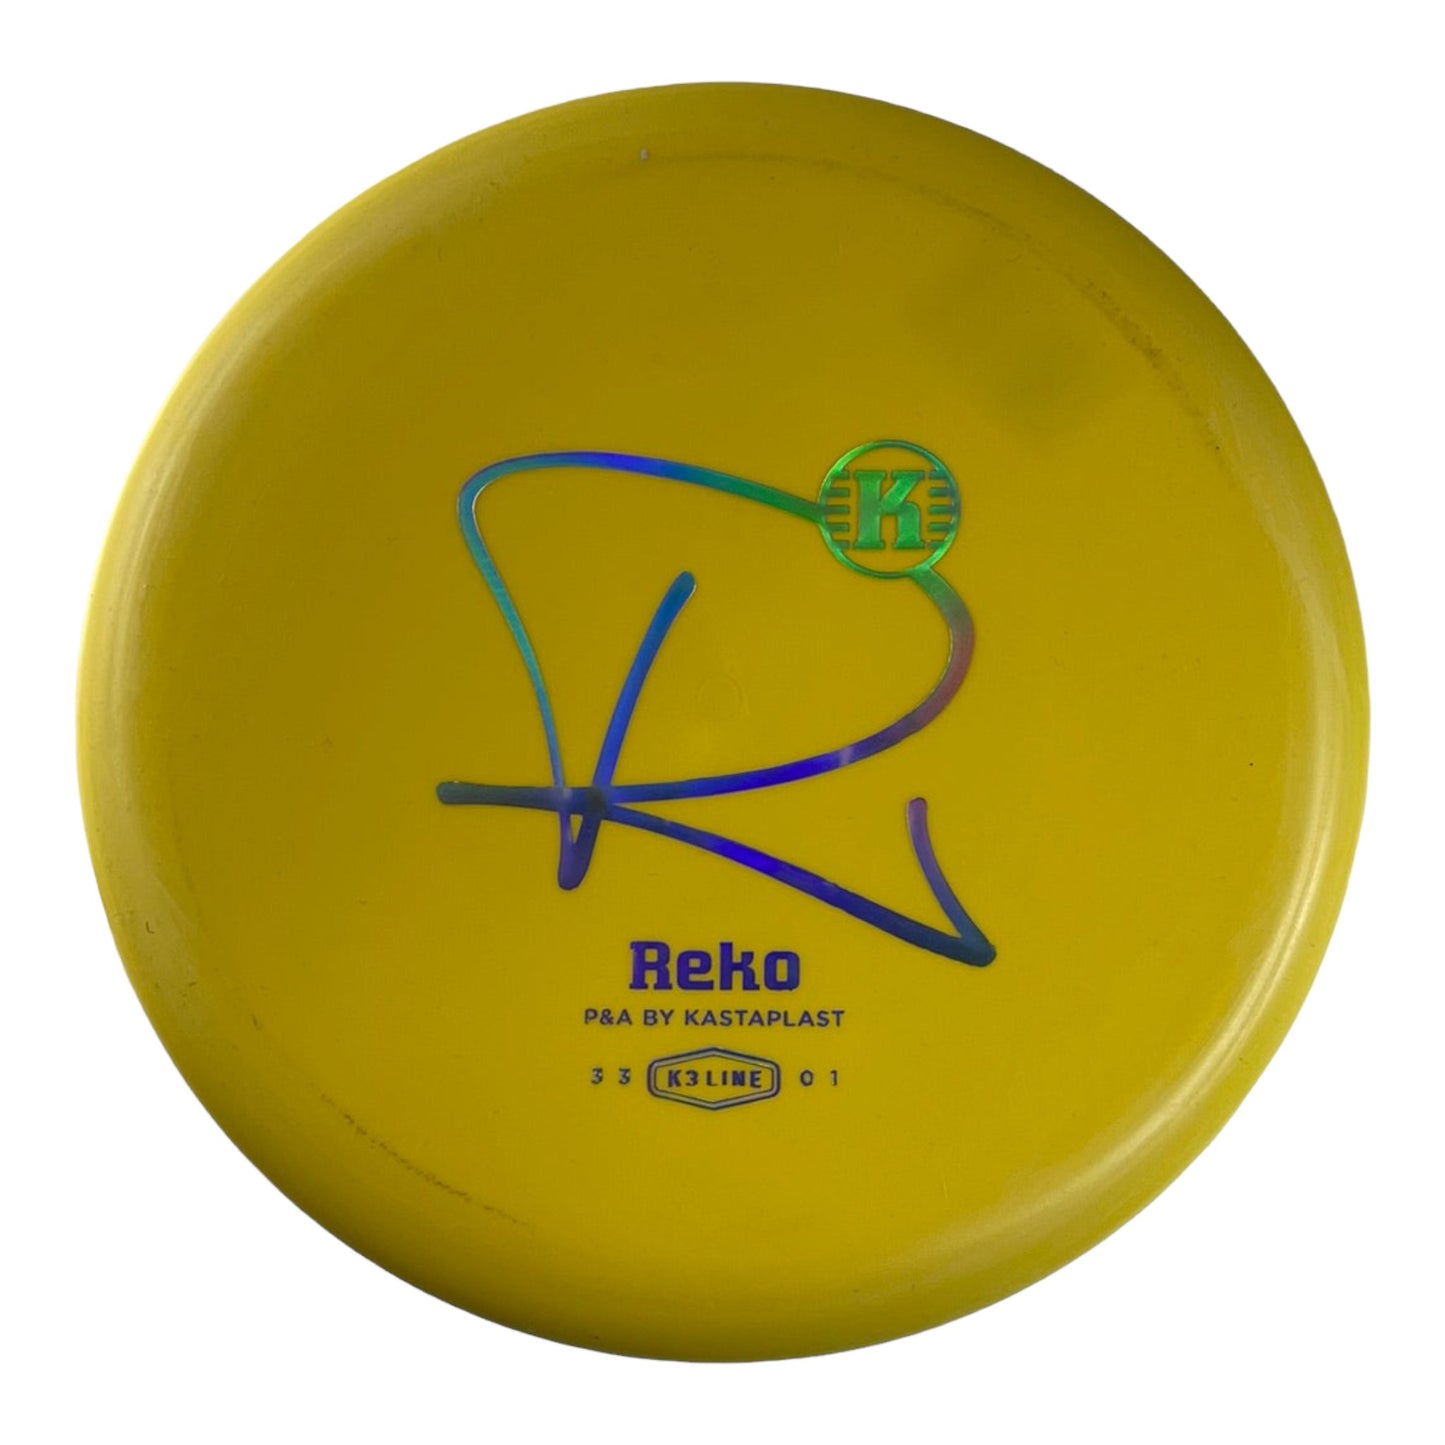 Kastaplast Reko | K3 | Yellow/Holo 171g Disc Golf